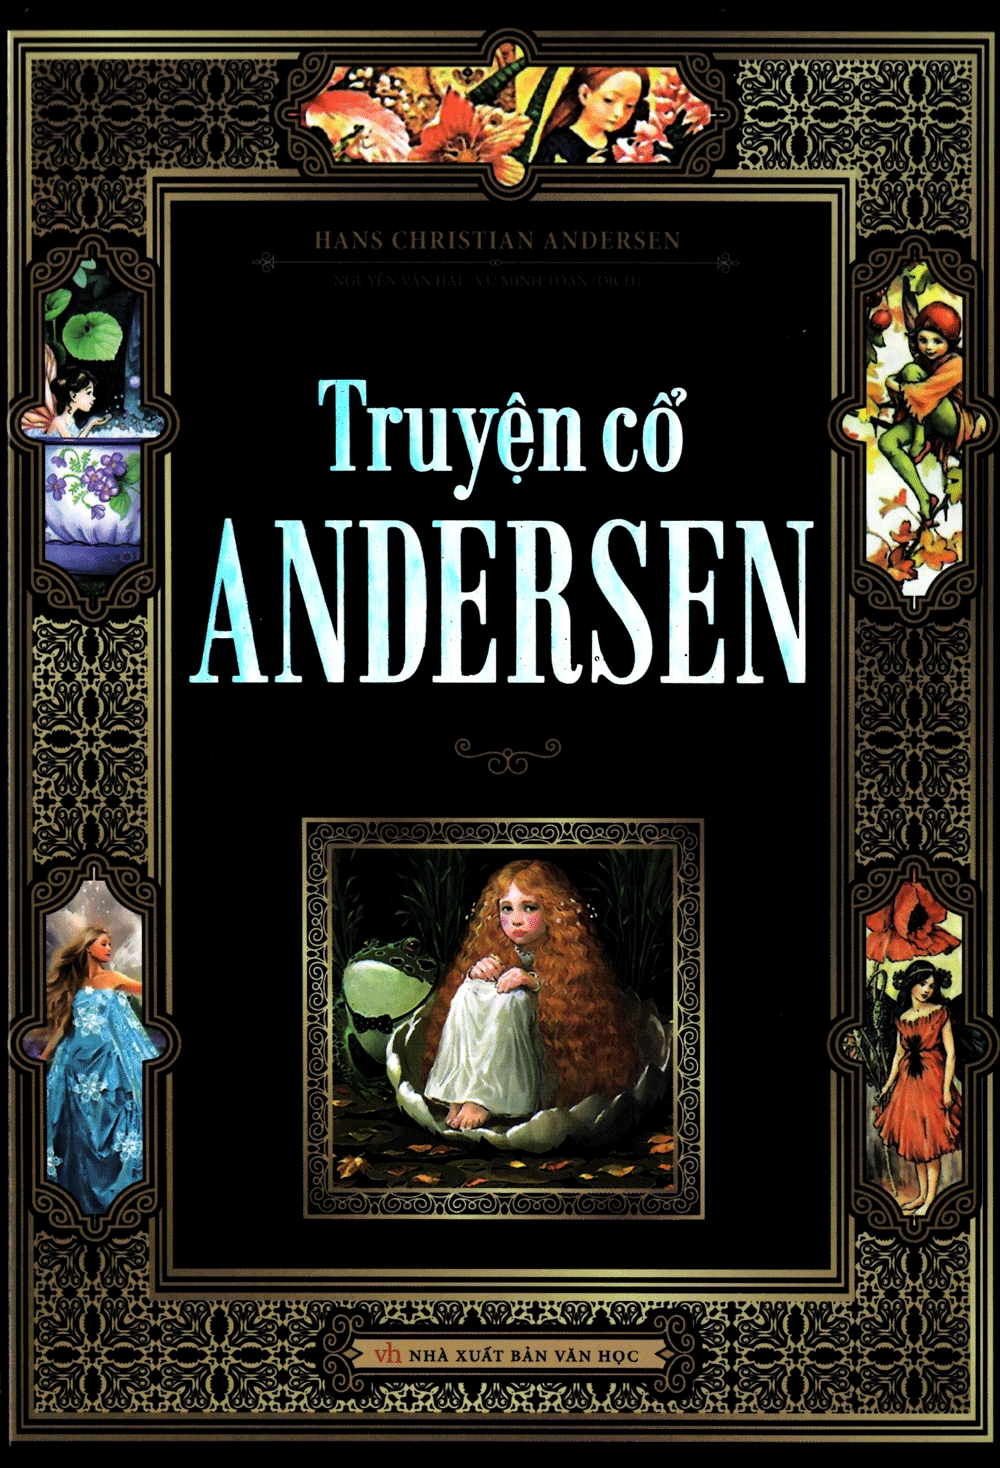 Truyện Cổ Andersen cover